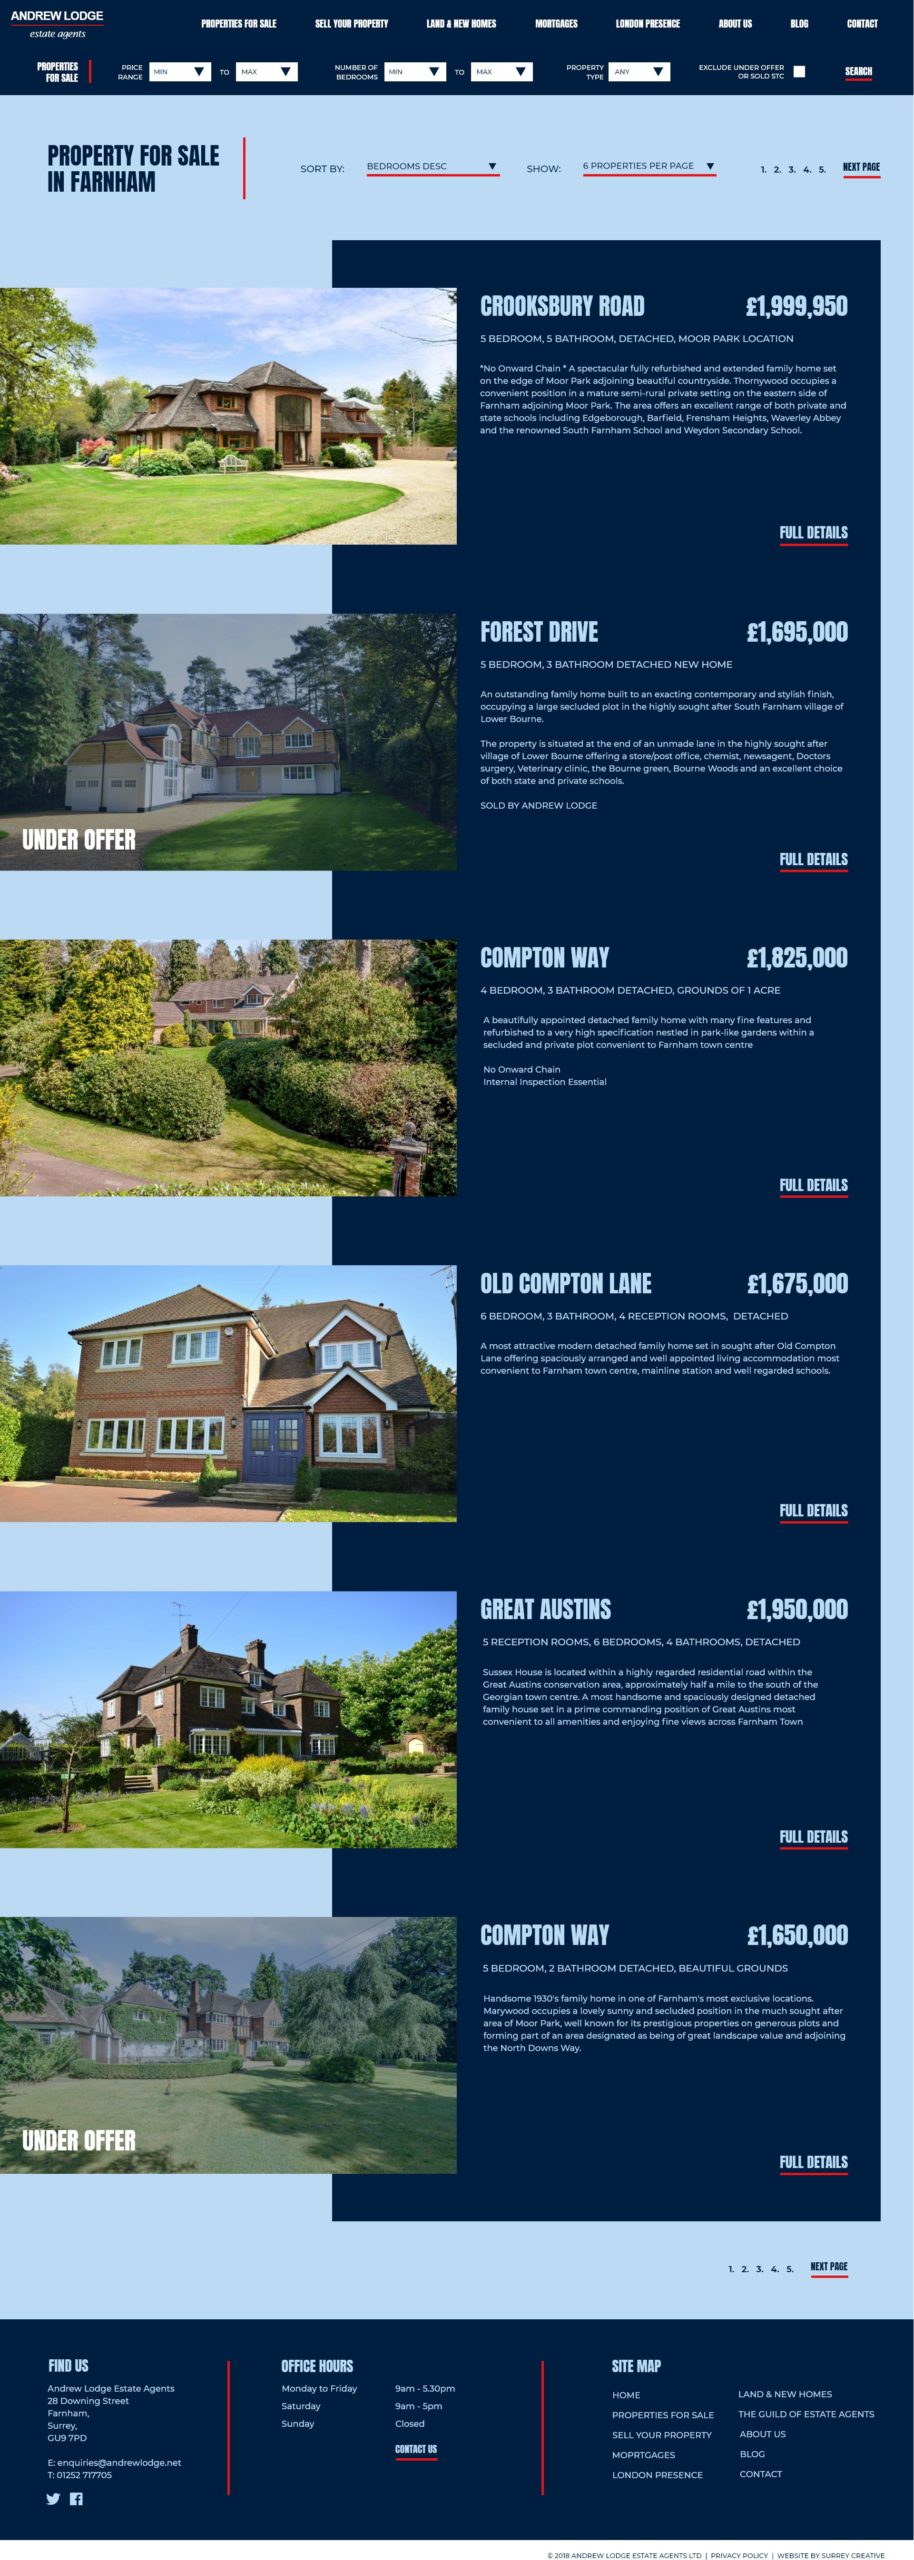 Bespoke Estate Agent Website By Surrey Creative